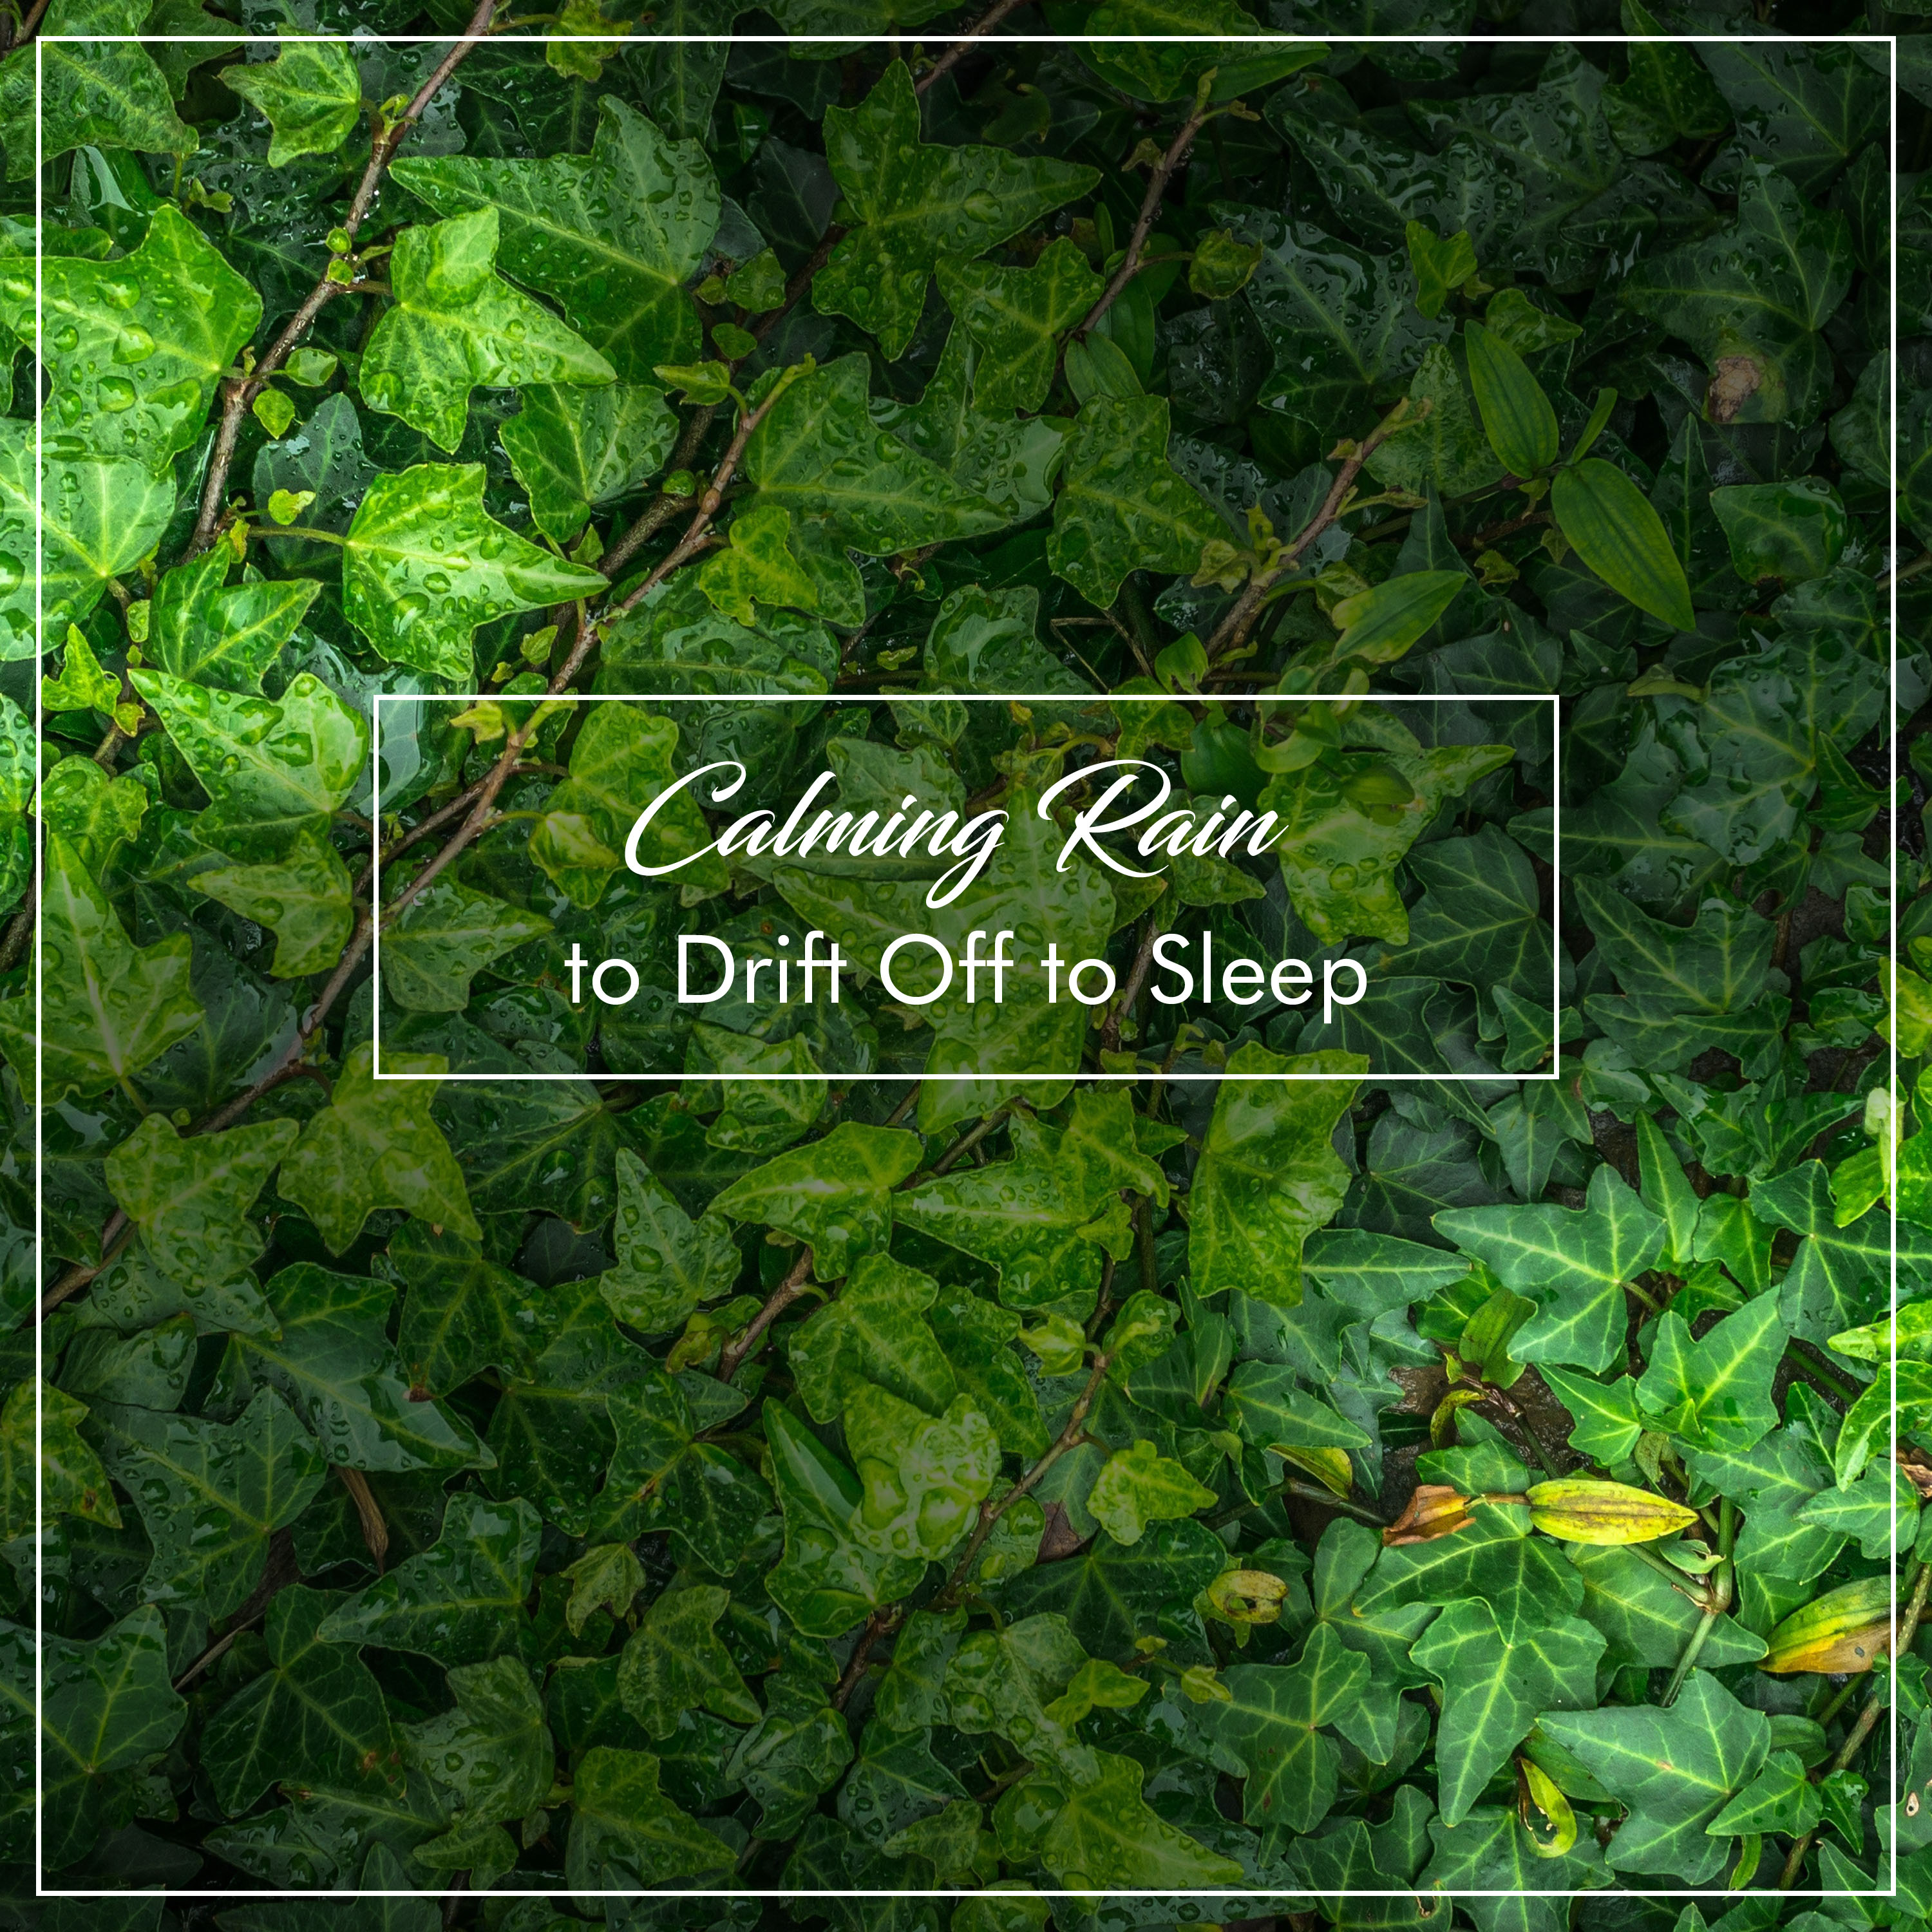 11 Calming Rain Album to Drift Off & Sleep